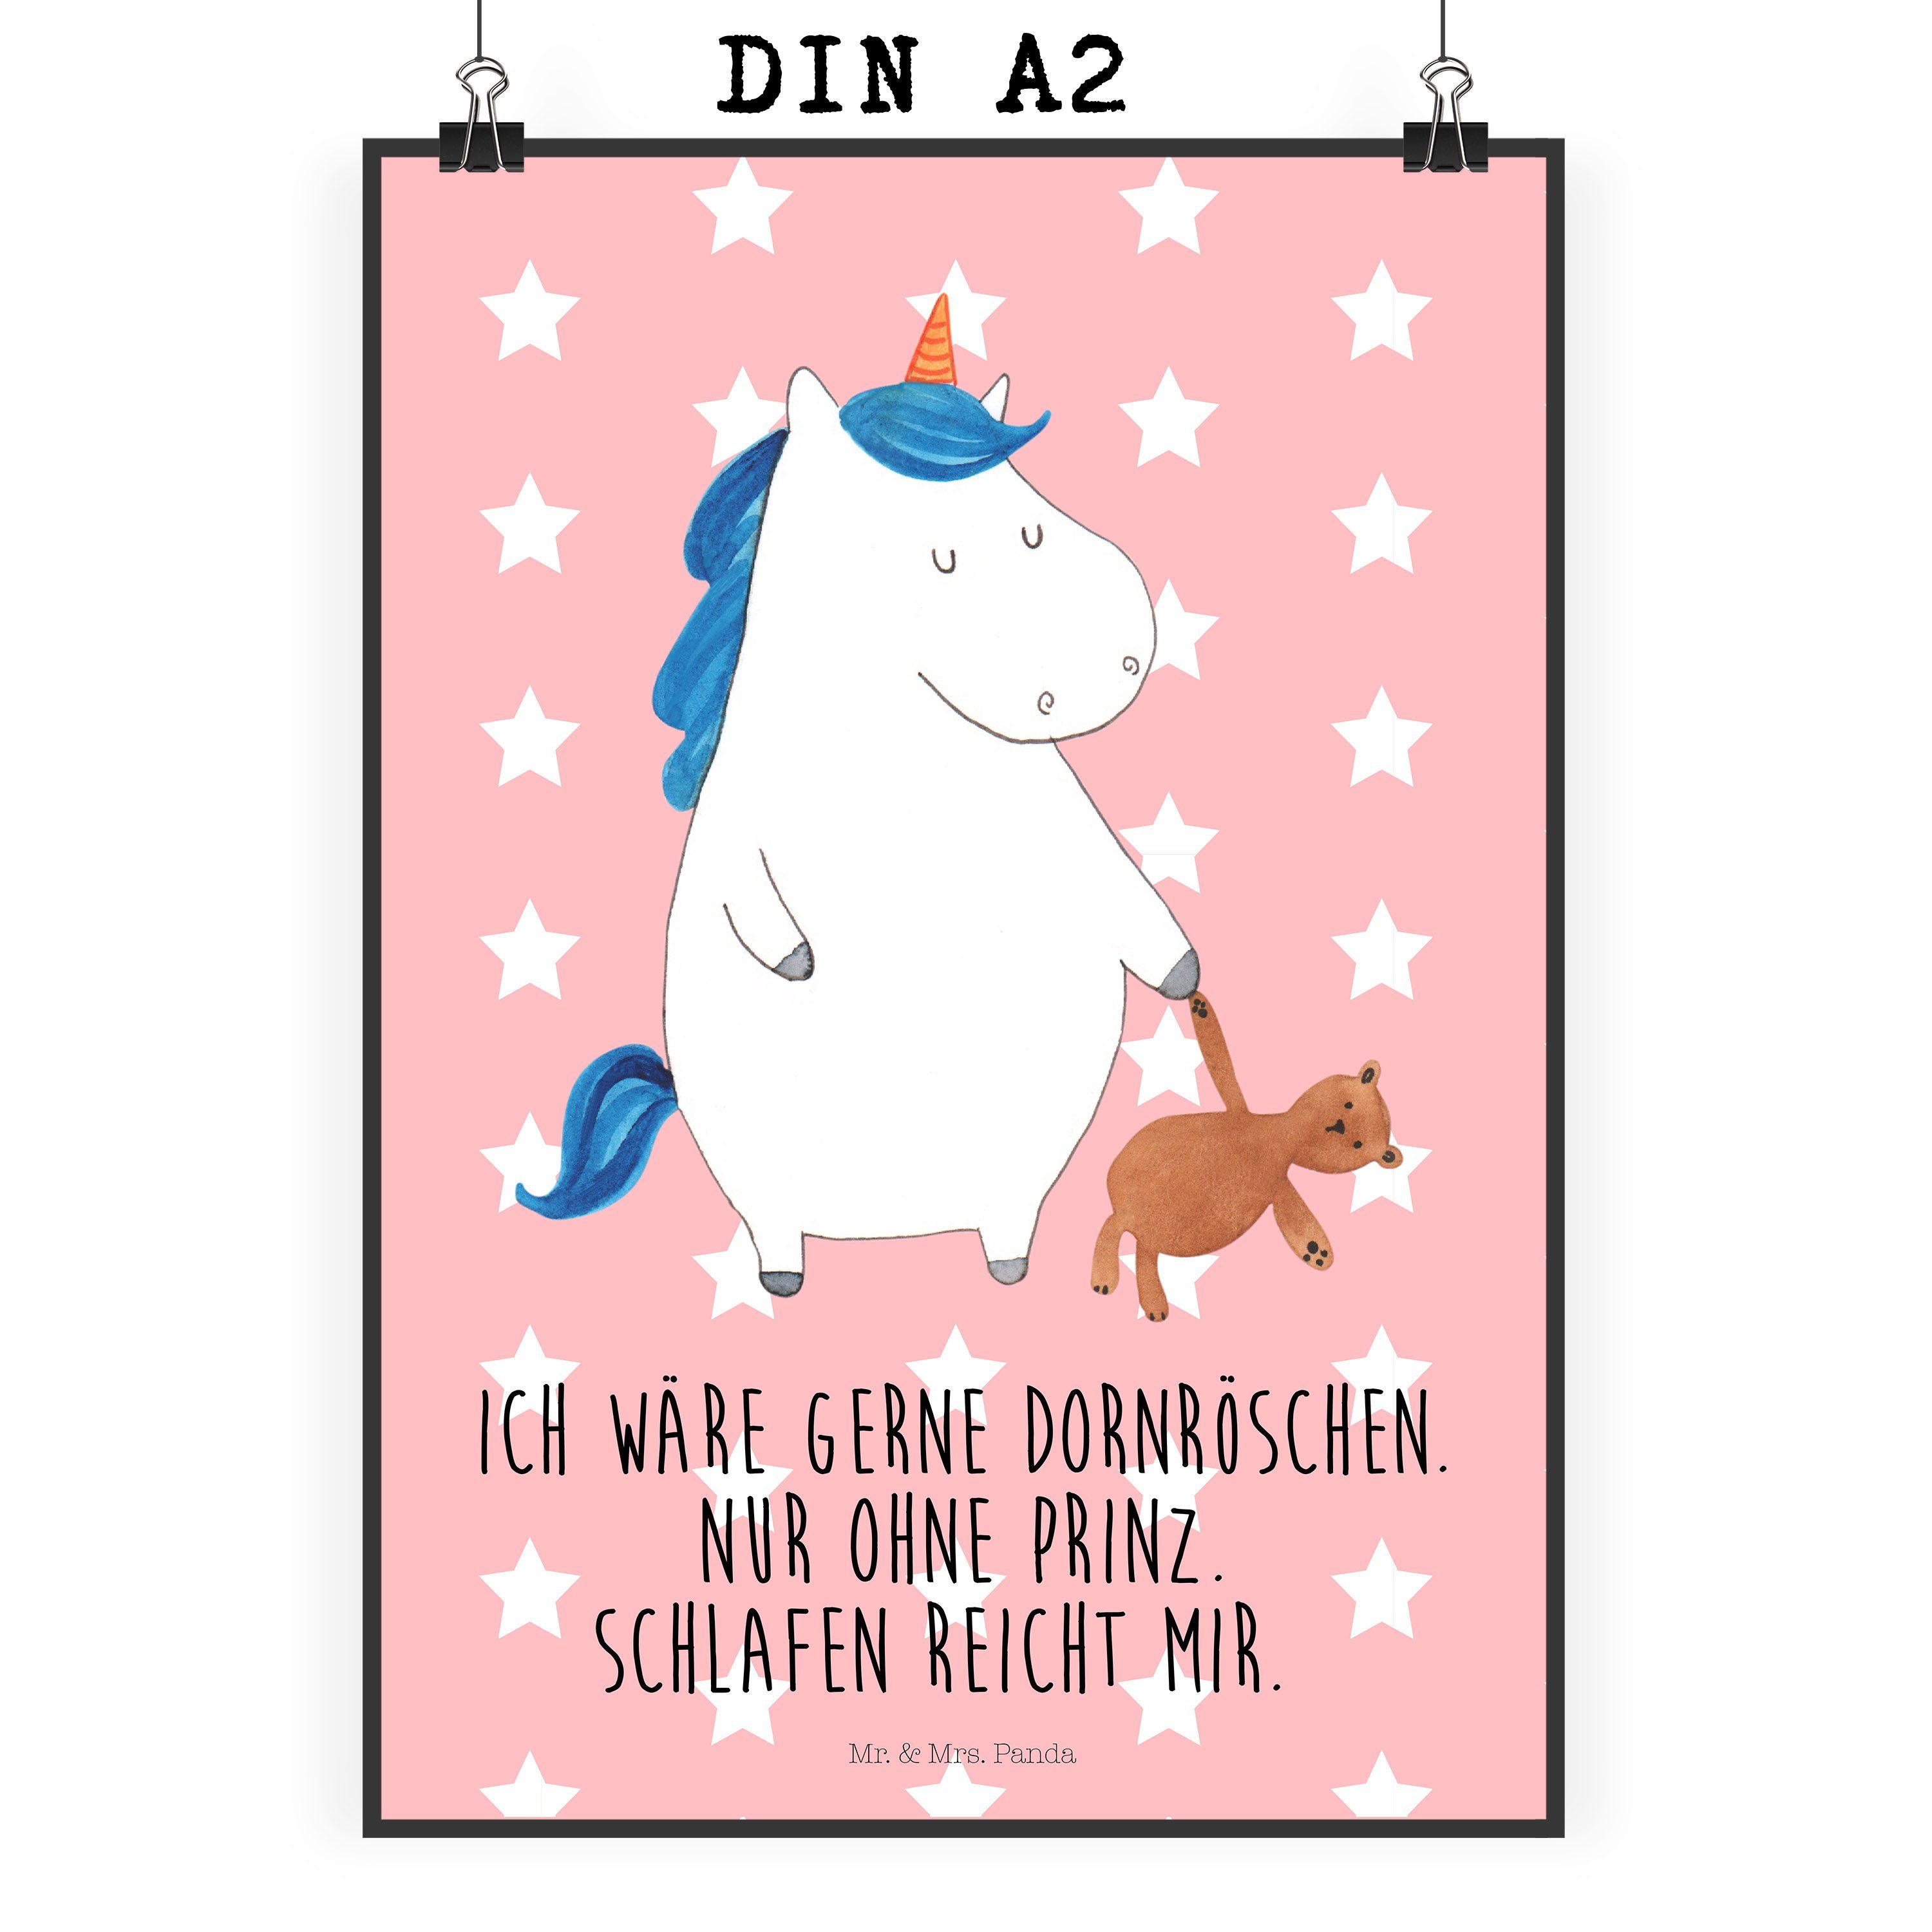 Mr. & Mrs. Panda Poster DIN A2 Einhorn Teddy - Rot Pastell - Geschenk, Singleleben, Kinderpos, Einhorn Teddy (1 St)